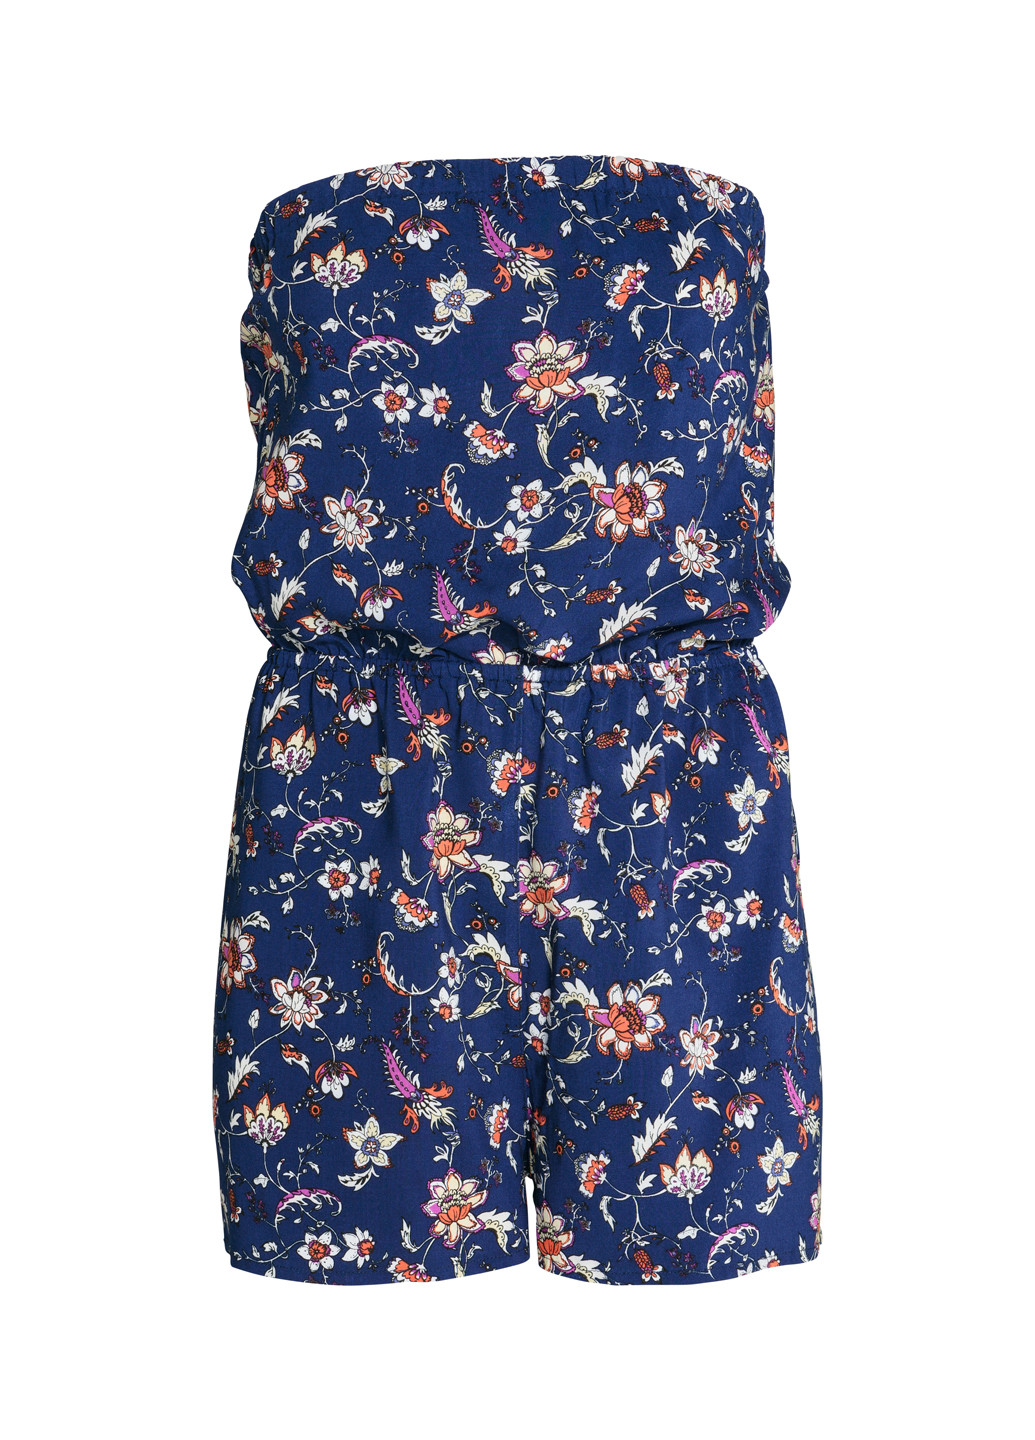 Комбинезон H&M комбинезон-шорты цветочный синий кэжуал вискоза, трикотаж